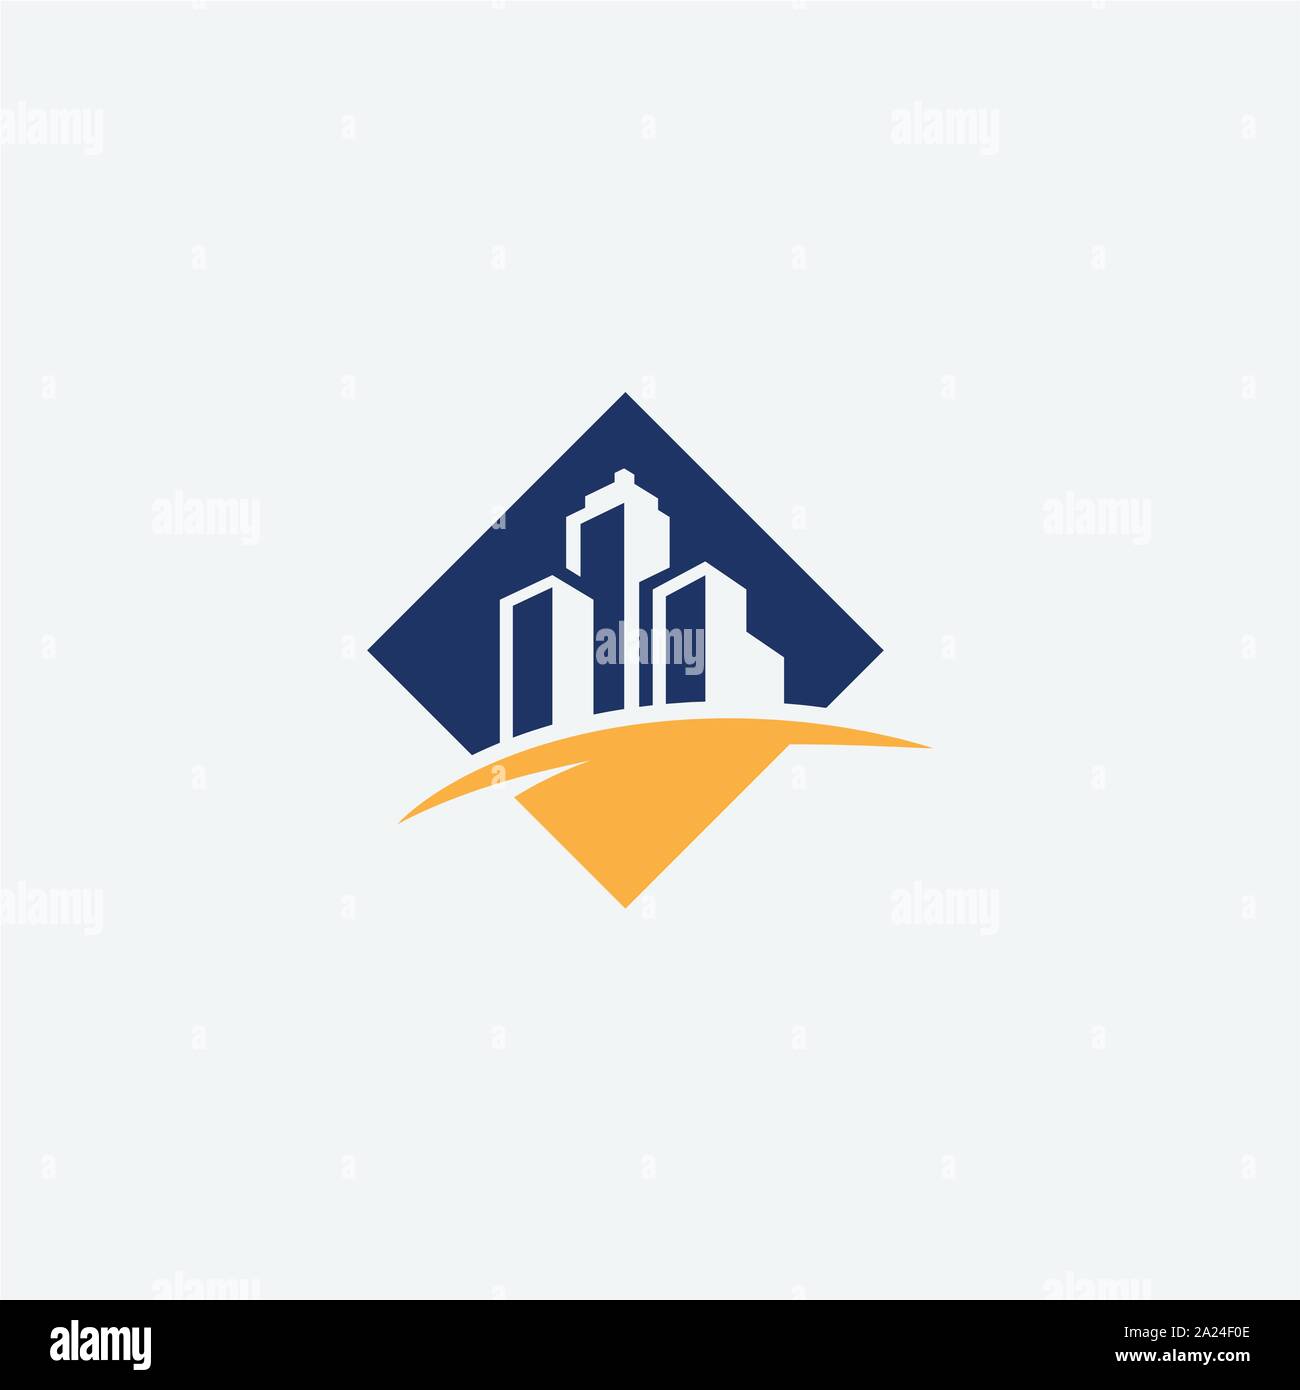 apartement logo design, building icon vector illustration, real estate icon Stock Vector